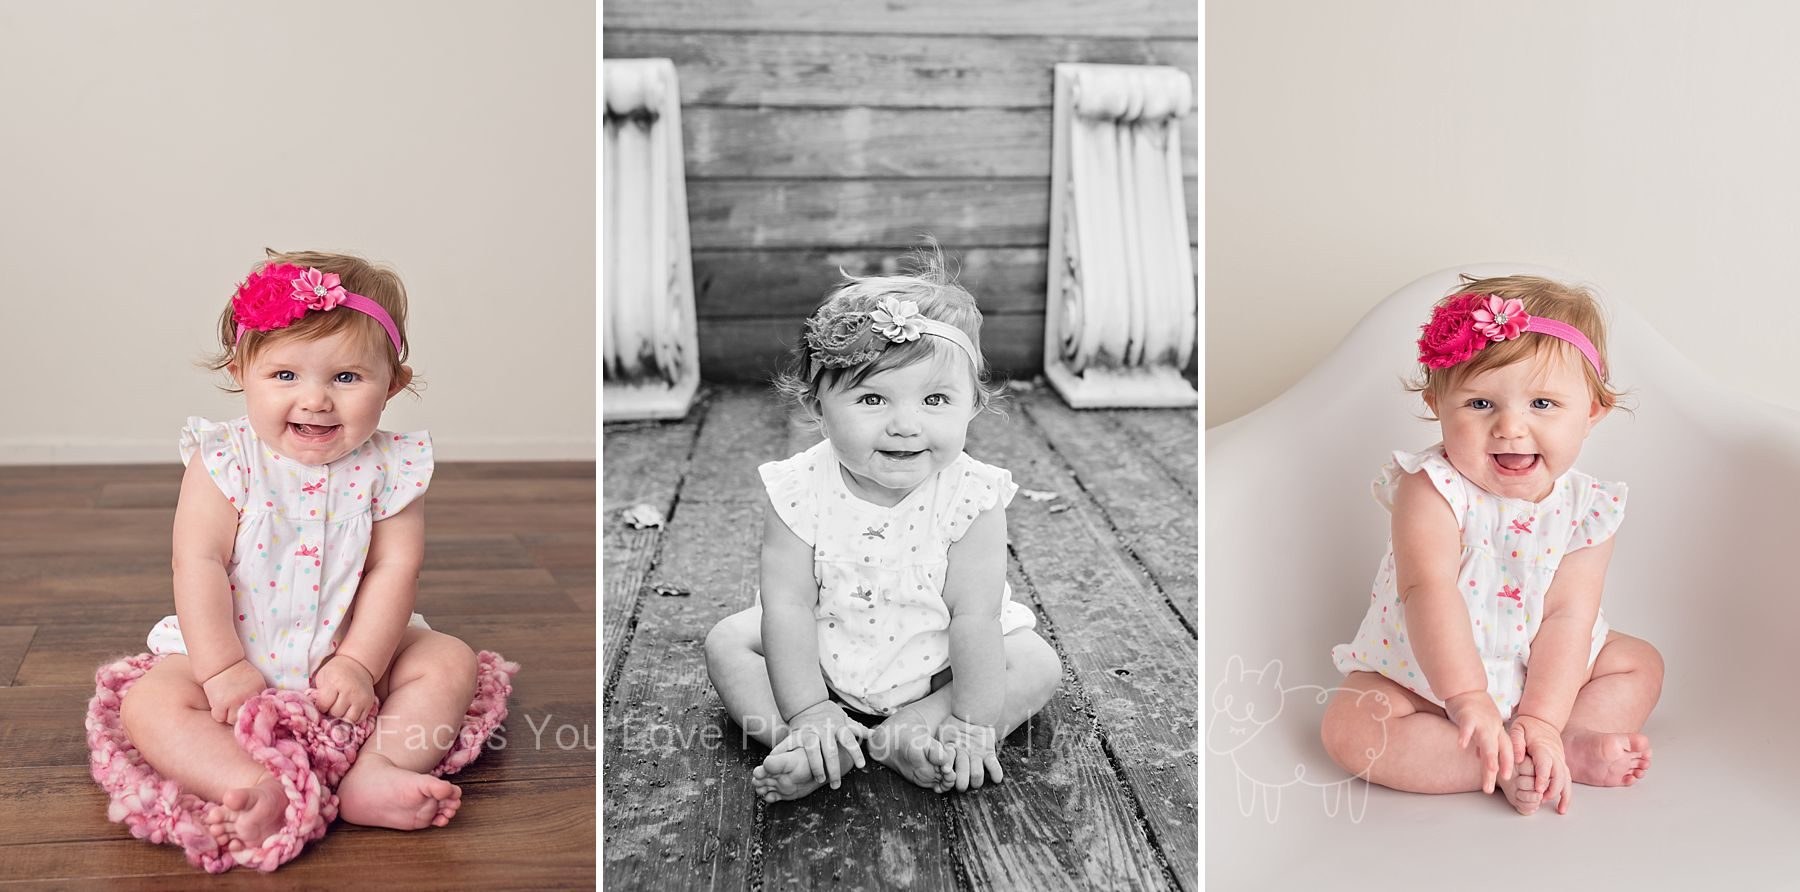 Best Baby Photographers Kansas City | facesyoulove.com